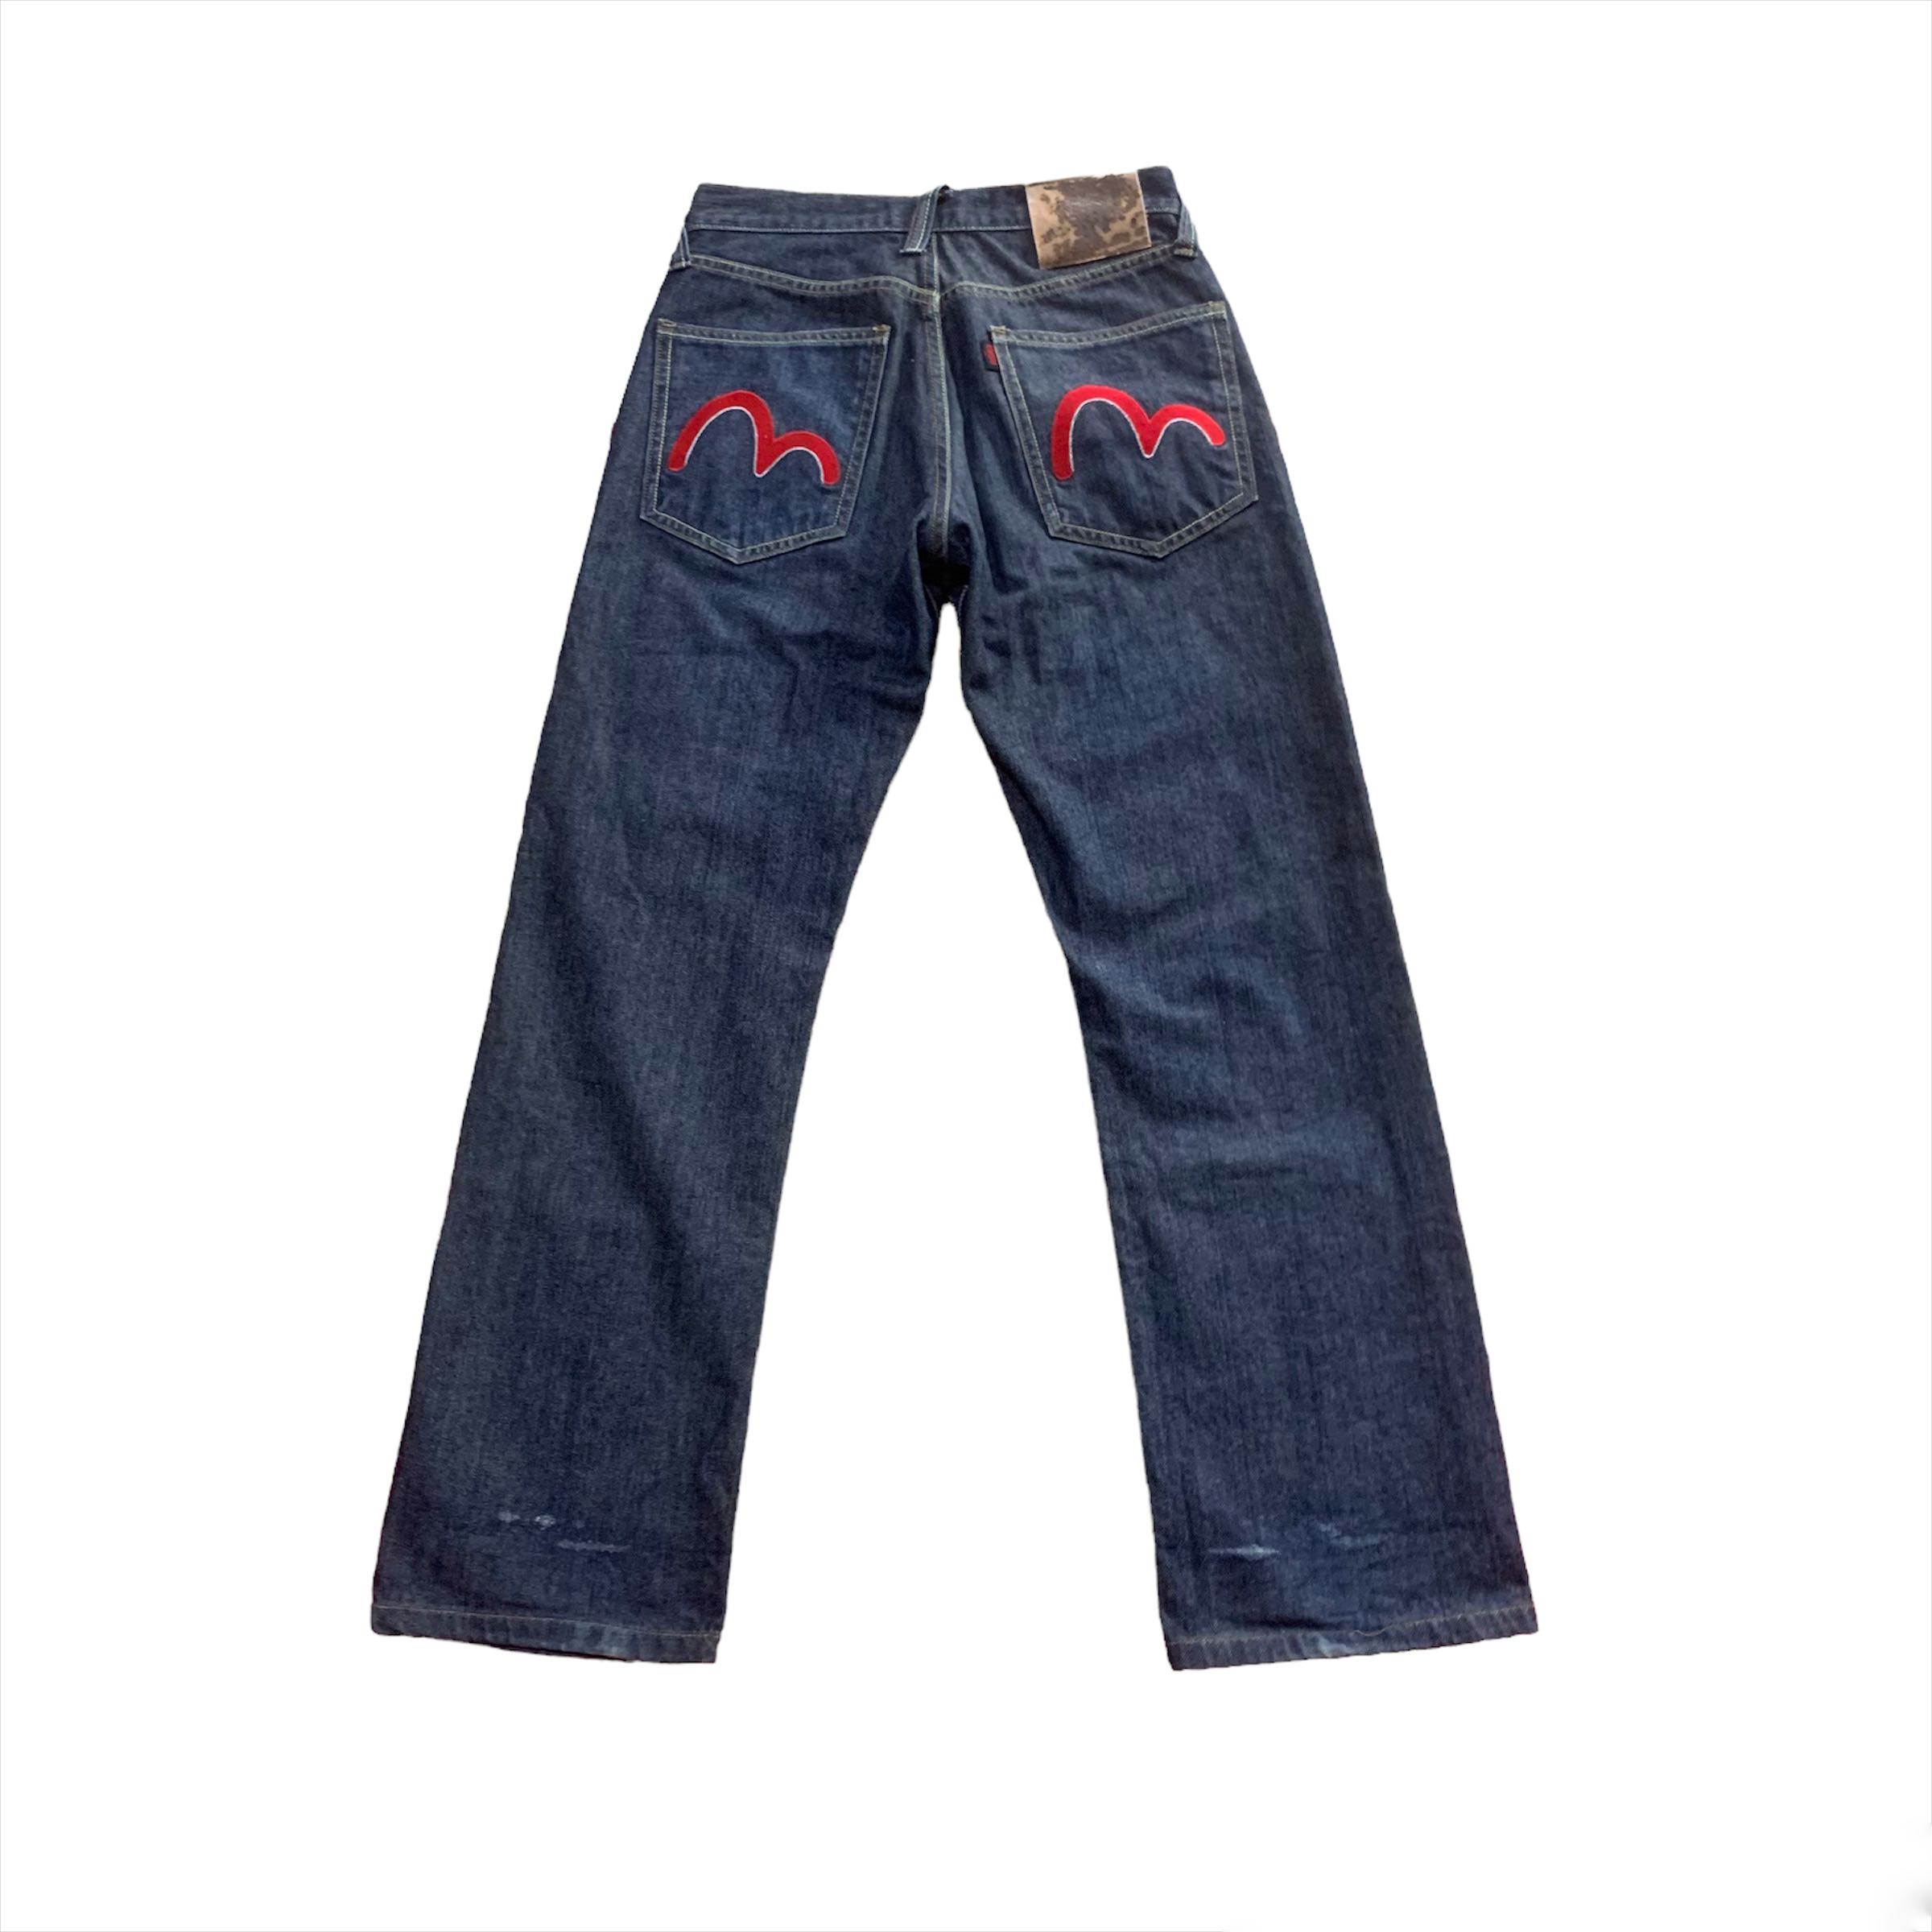 JAPANESE BRAND 🔥 Evisu Genes DenimMaster Selvedge Jeans - 2